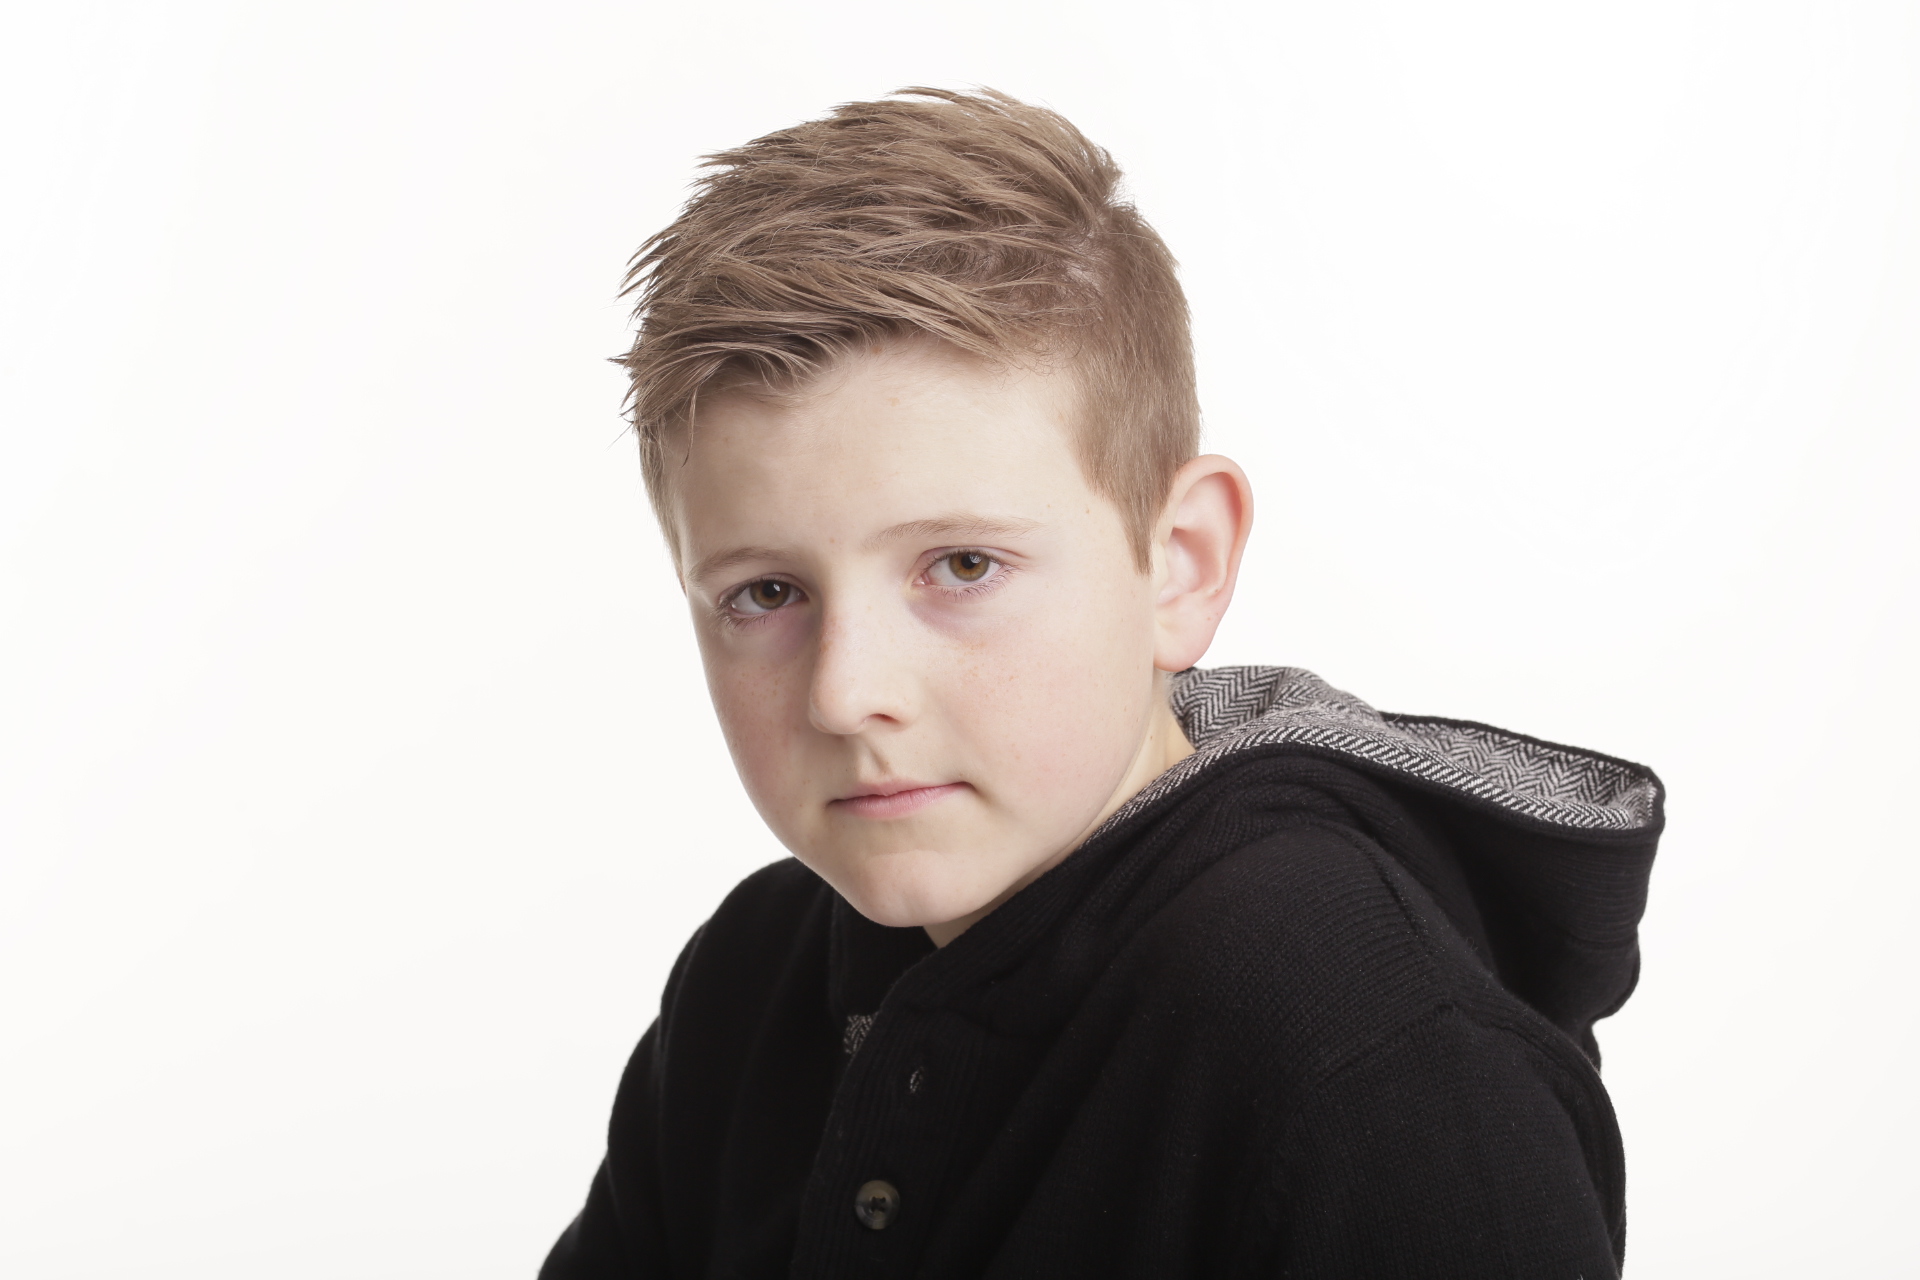 Samuel aged 13